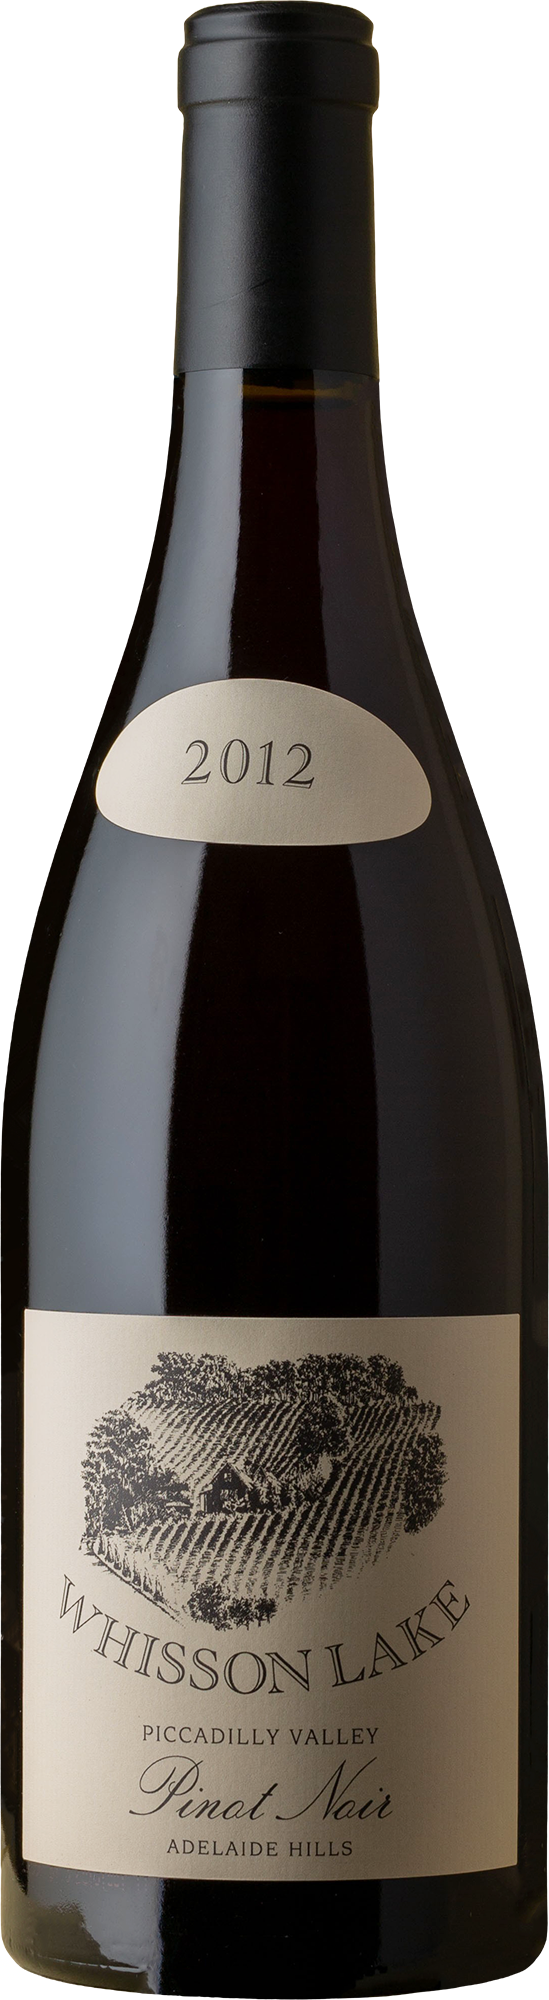 Whisson Lake - White Label Pinot Noir 2012 Red Wine